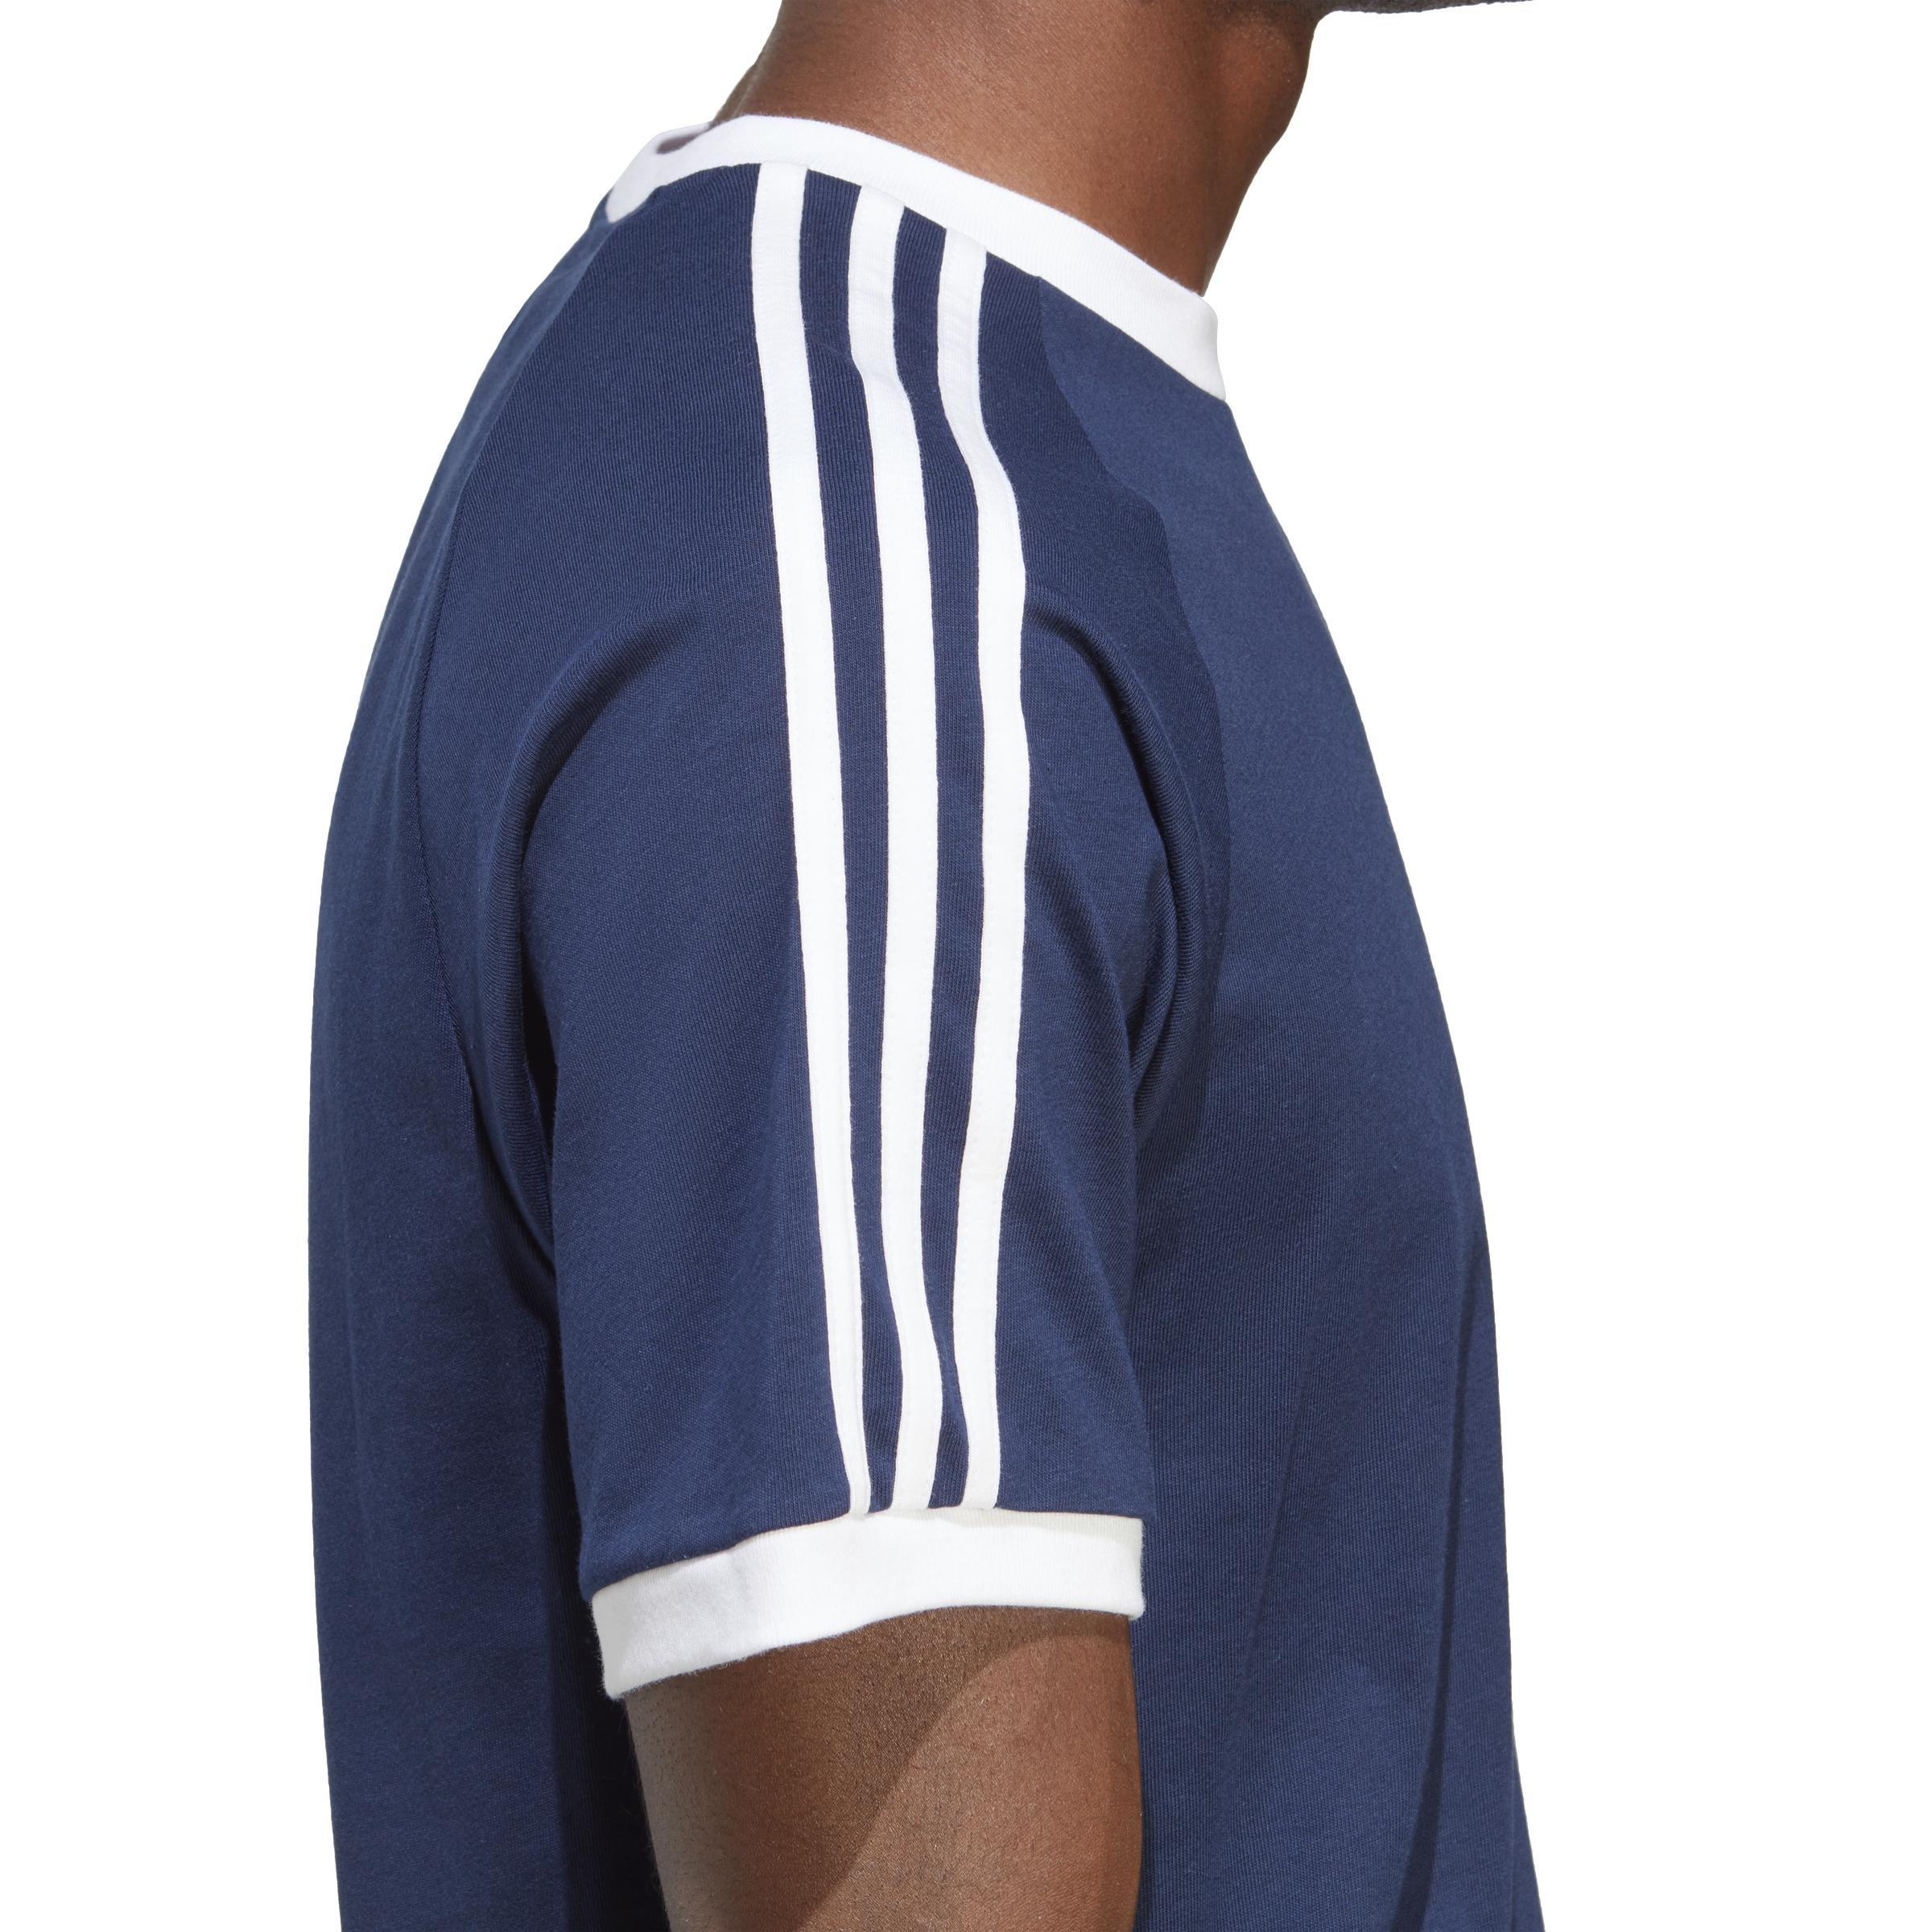 adidas - Men Adicolor Classics 3-Stripes T-Shirt, Navy